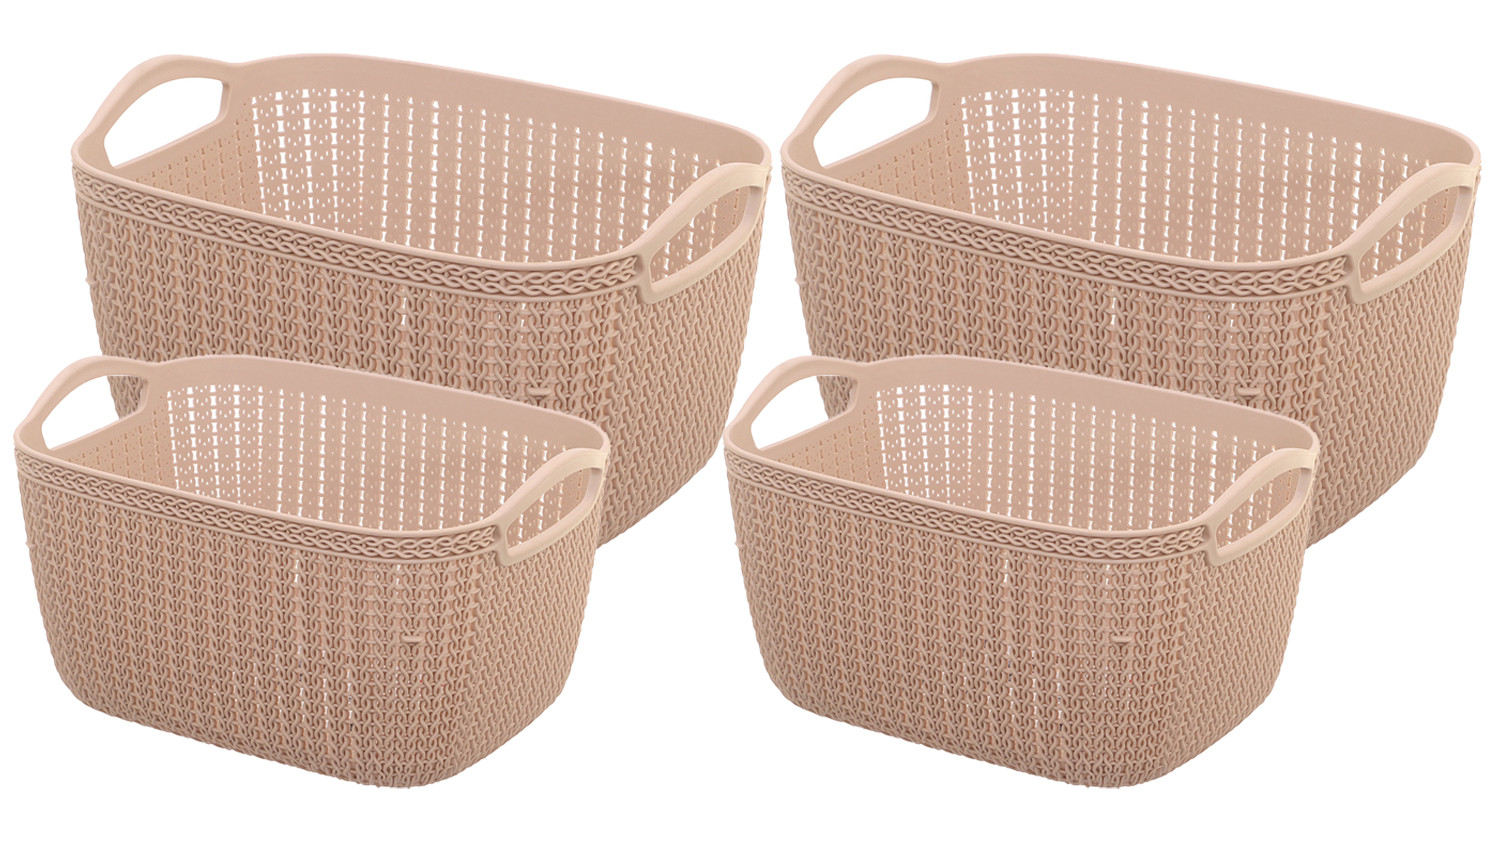 Kuber Industries Unbreakable Plastic Multipurpose Large And Medium Size Flexible Storage Baskets / Fruit Vegetable Bathroom Stationary Home Basket with Handles (Peach) -CTKTC39342